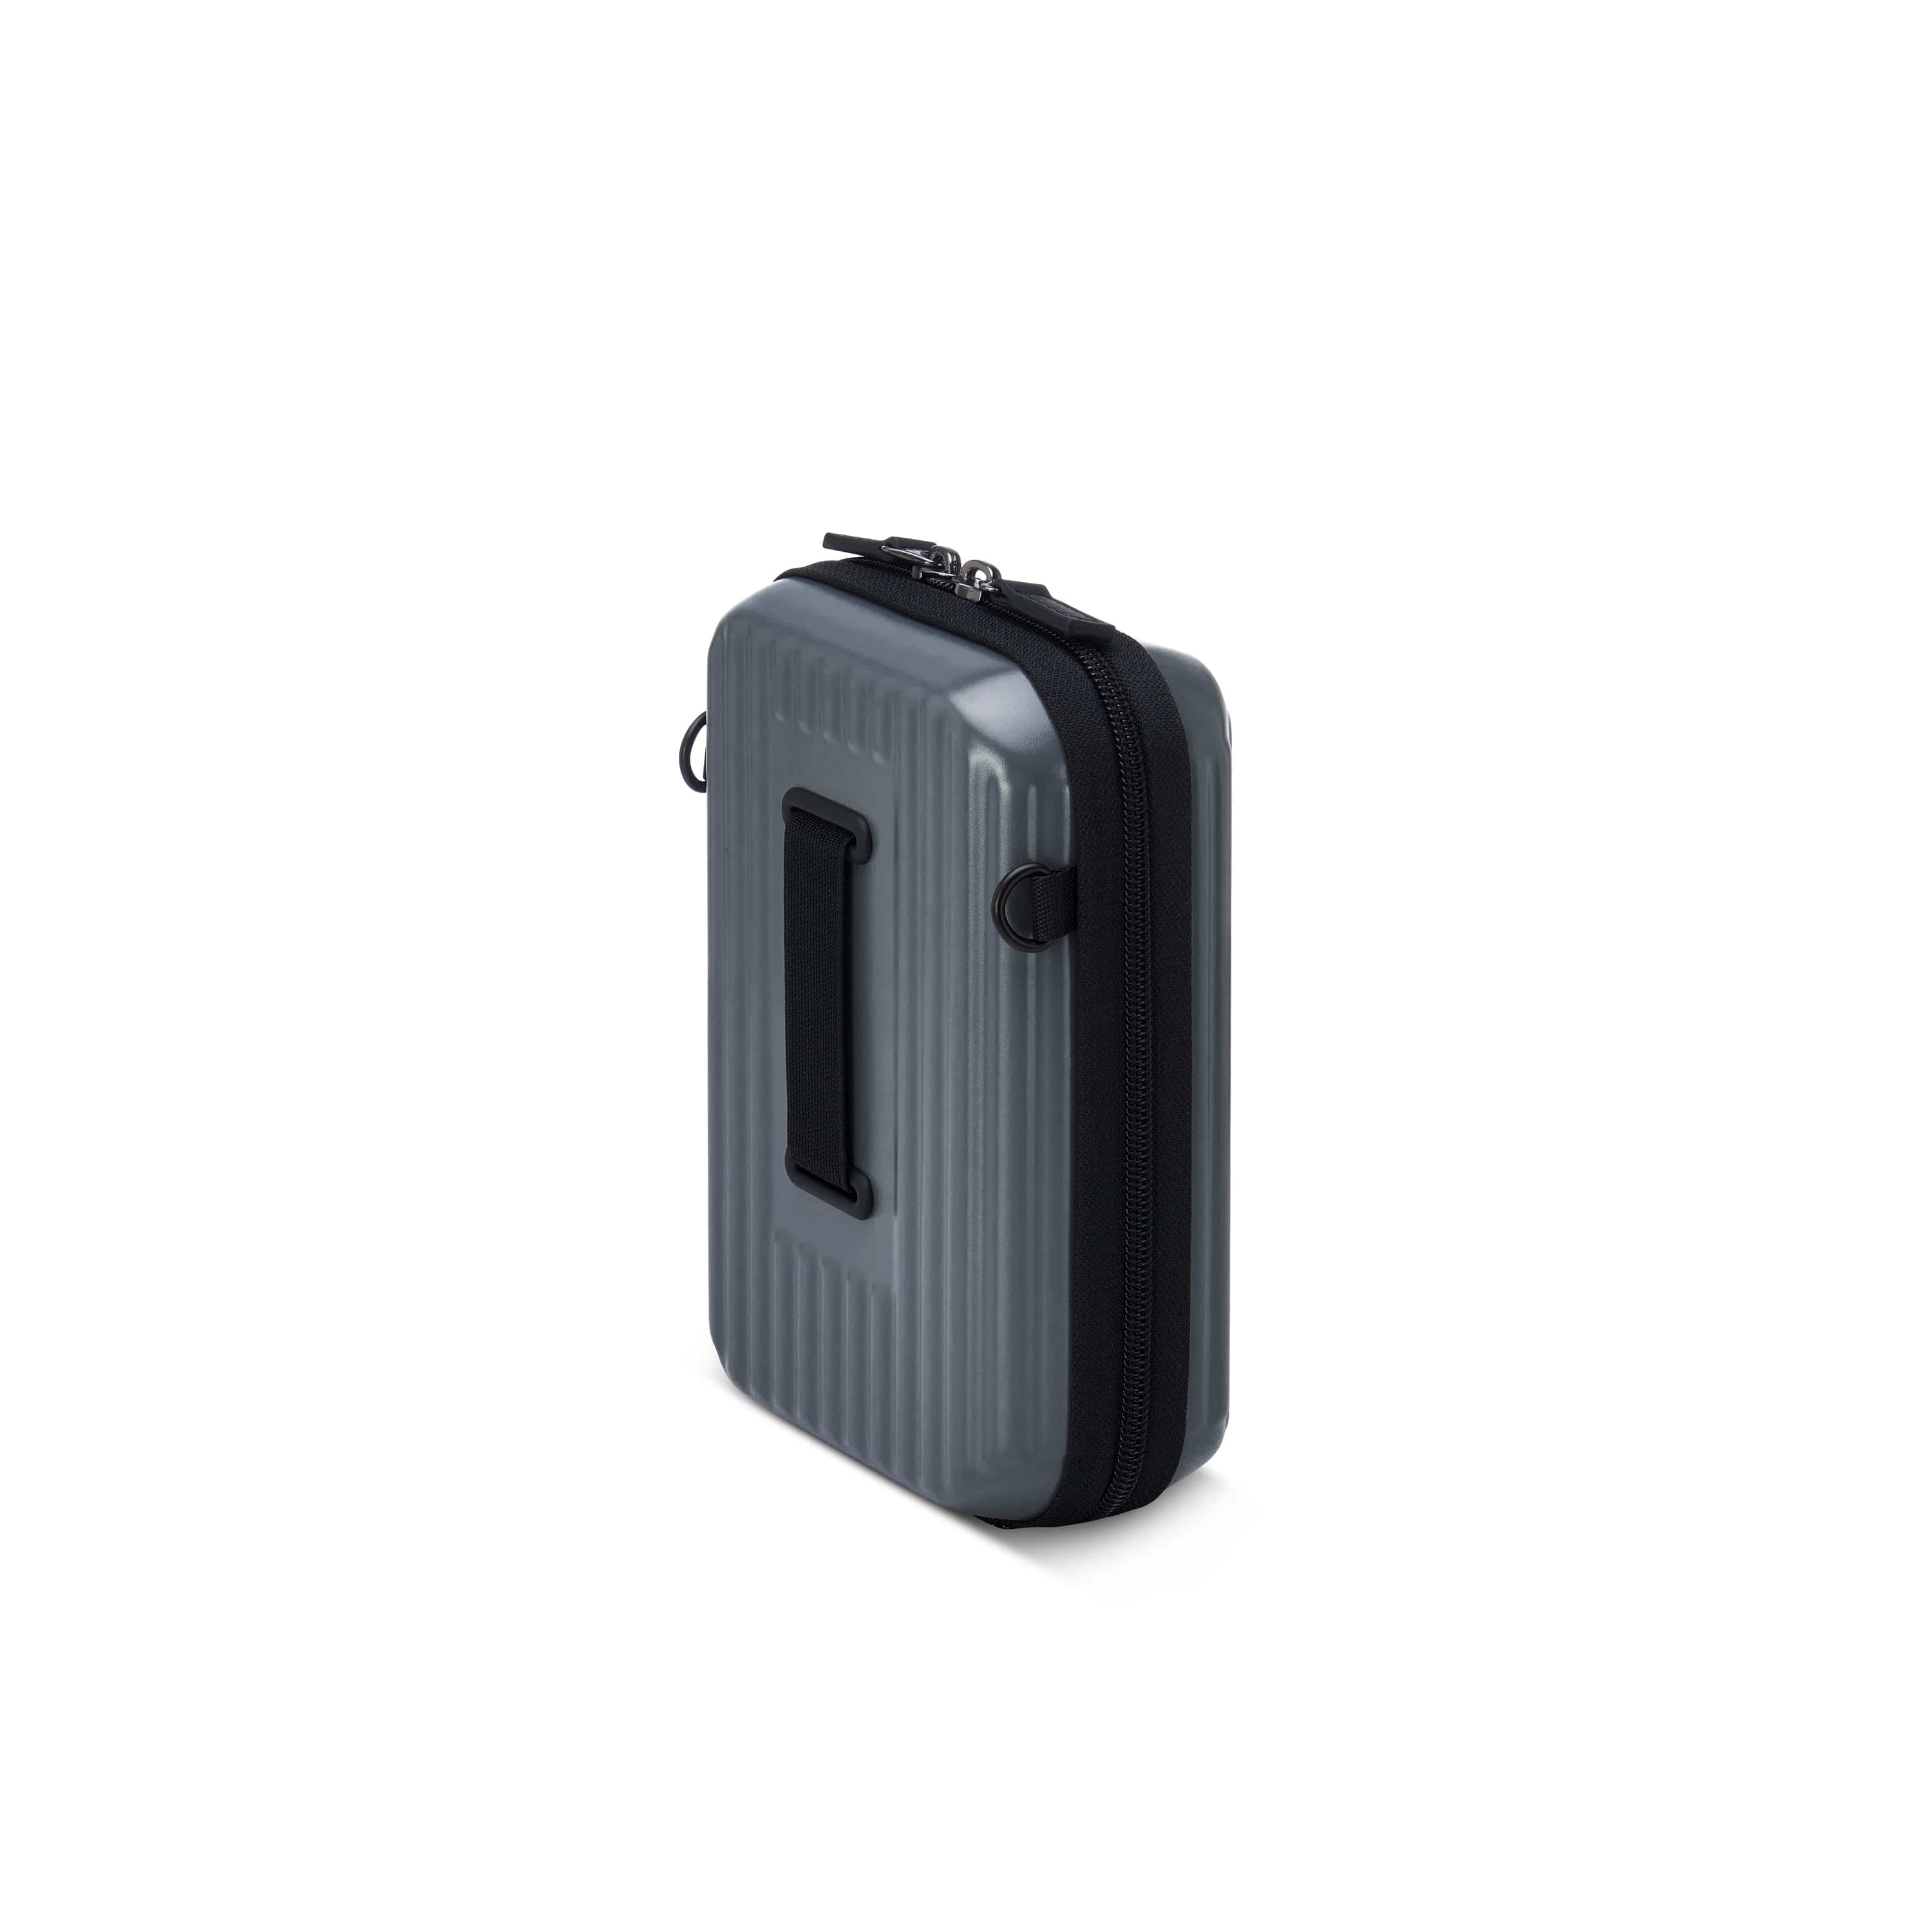 Delsey Securitime Hardcase Clutch With Removable Shoulder Strap Anthracite - 00217311501